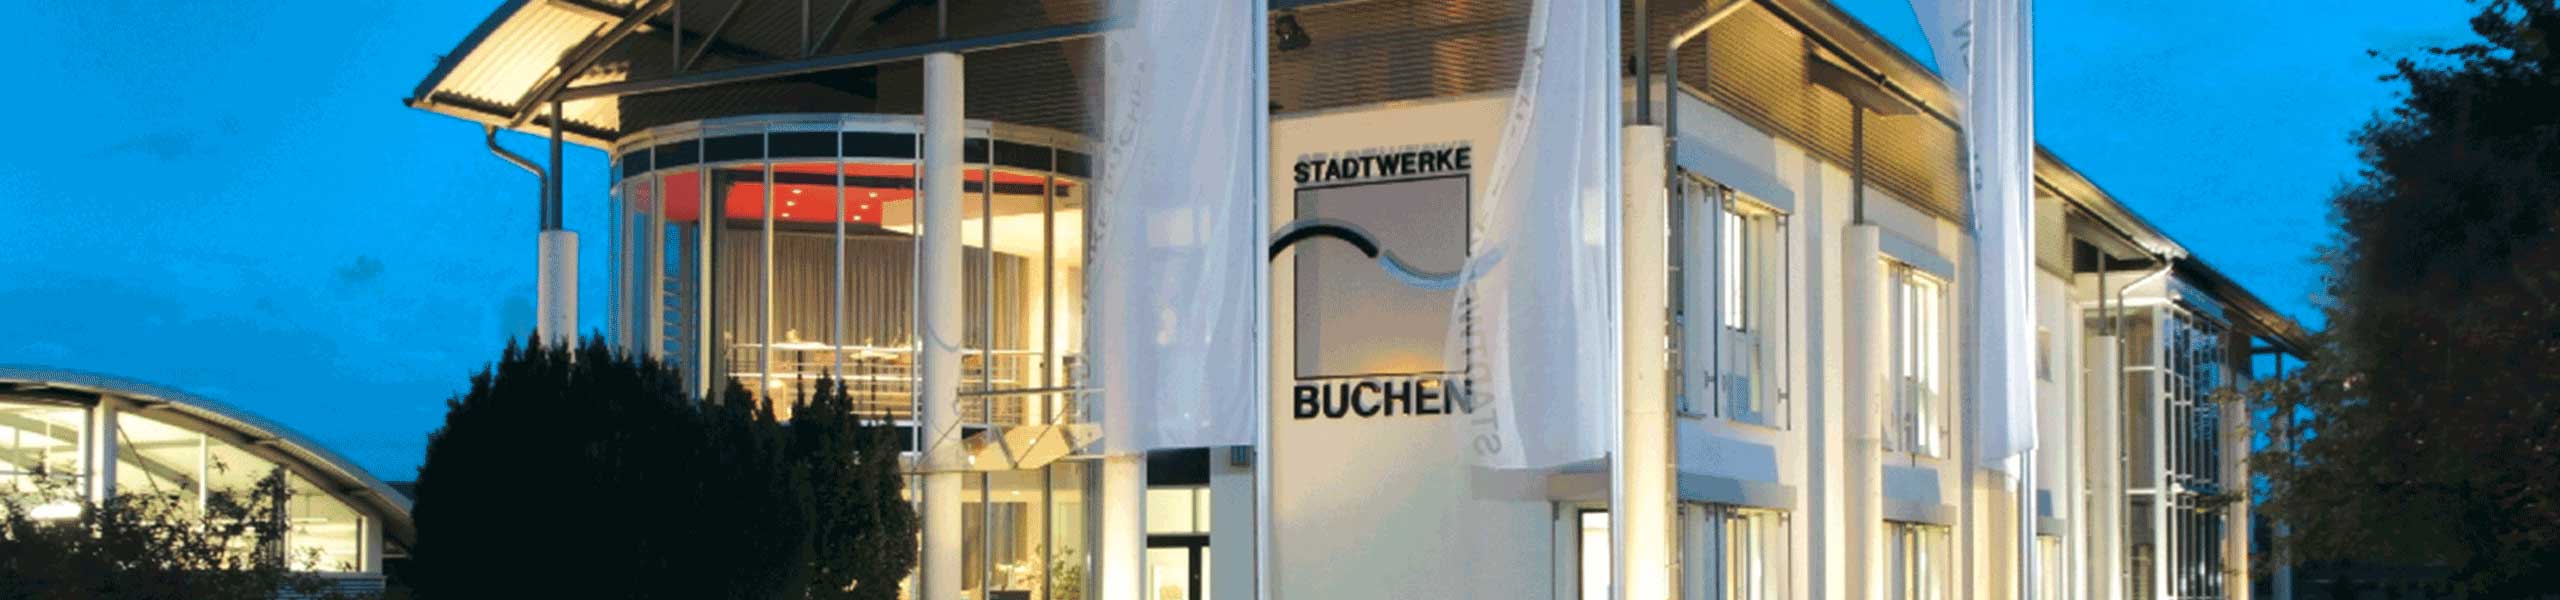 Stadtwerke Buchen GmbH & Co KG - Kurse